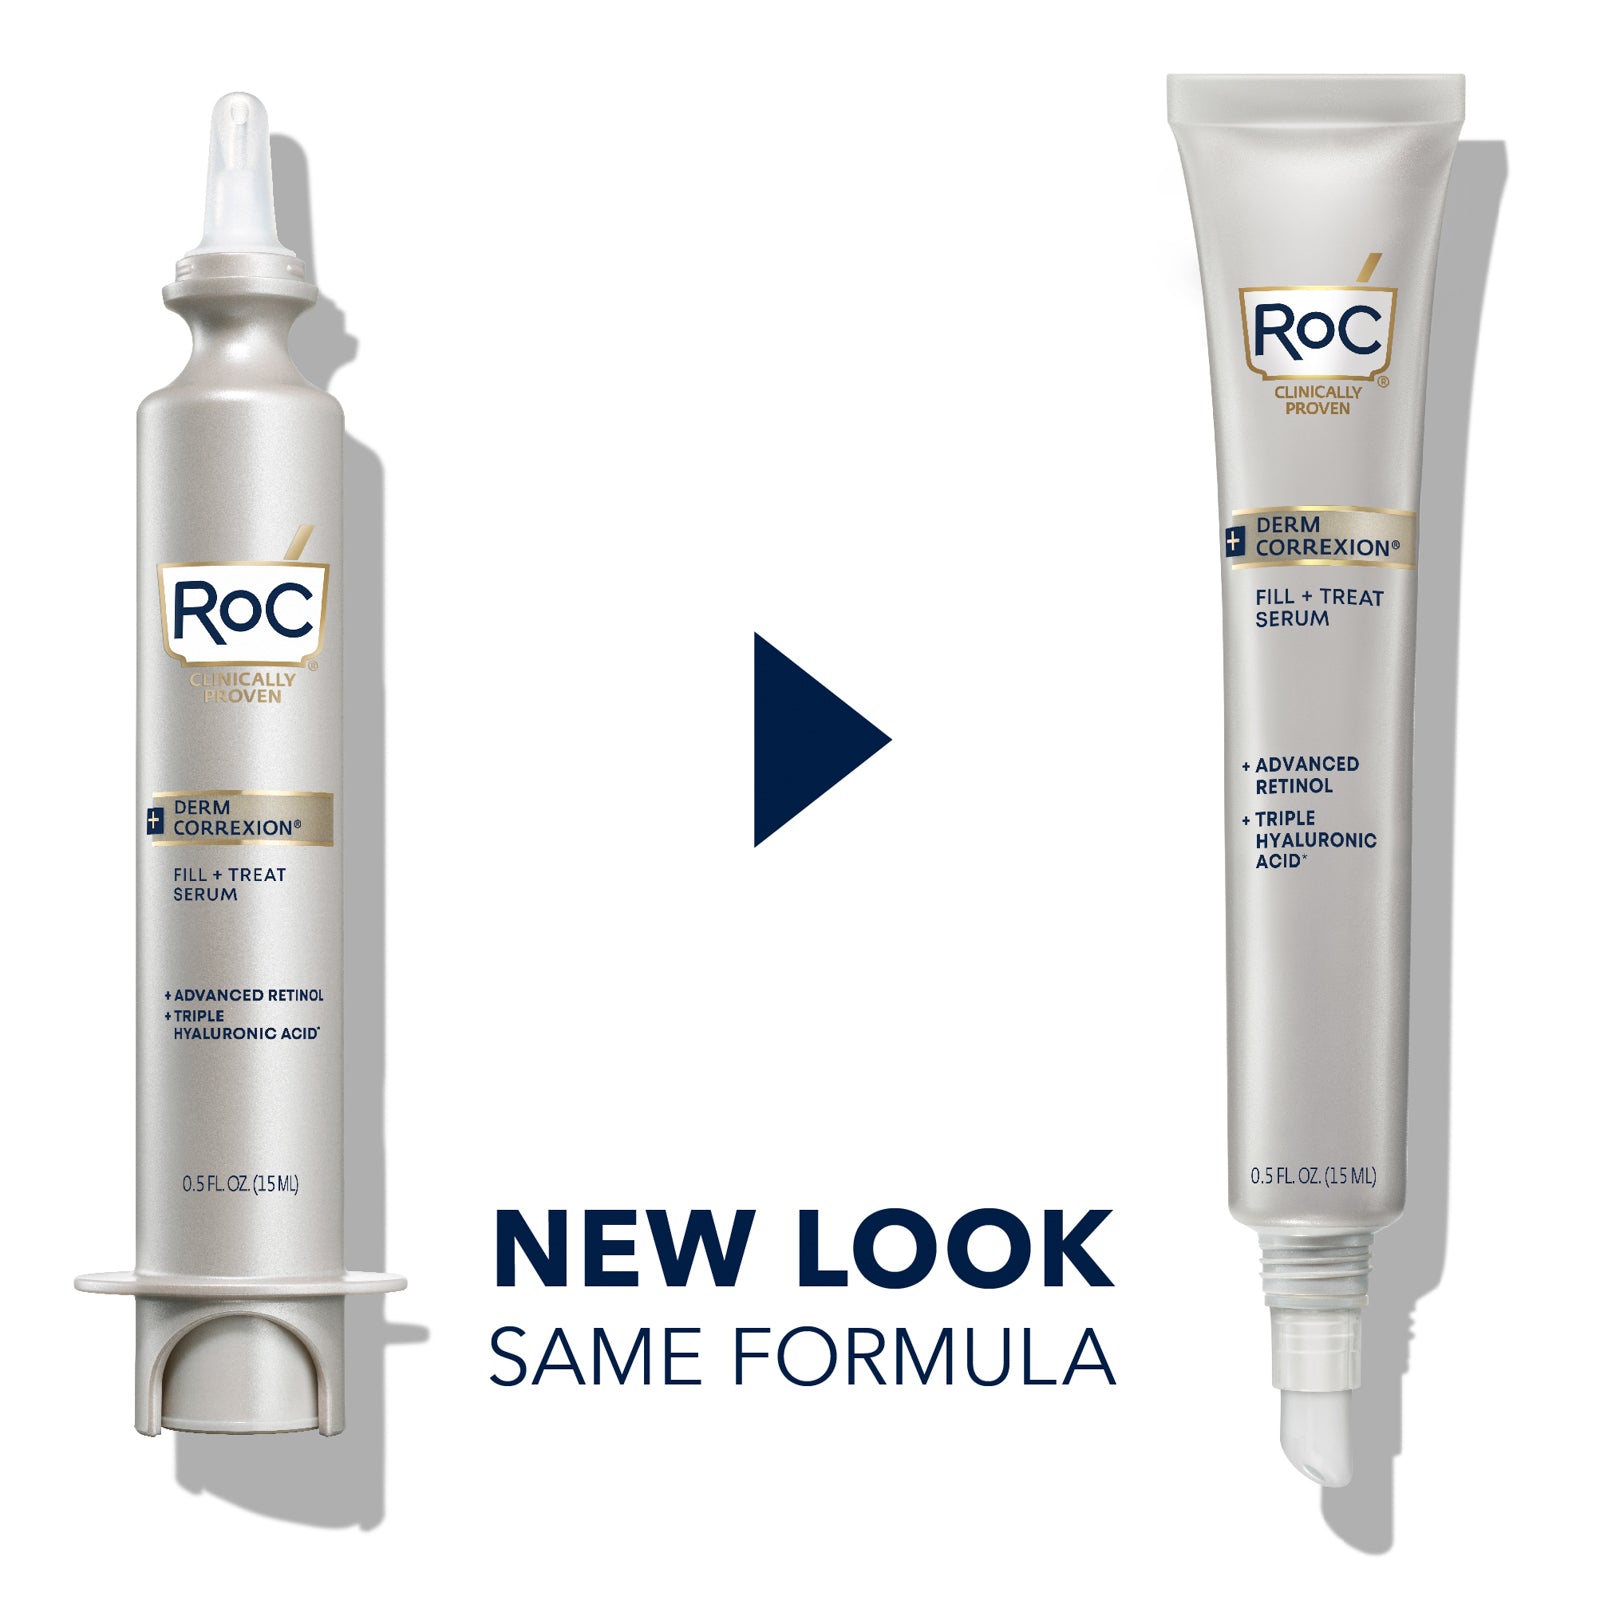 roc advanced retinol and triple hyaluronic acid